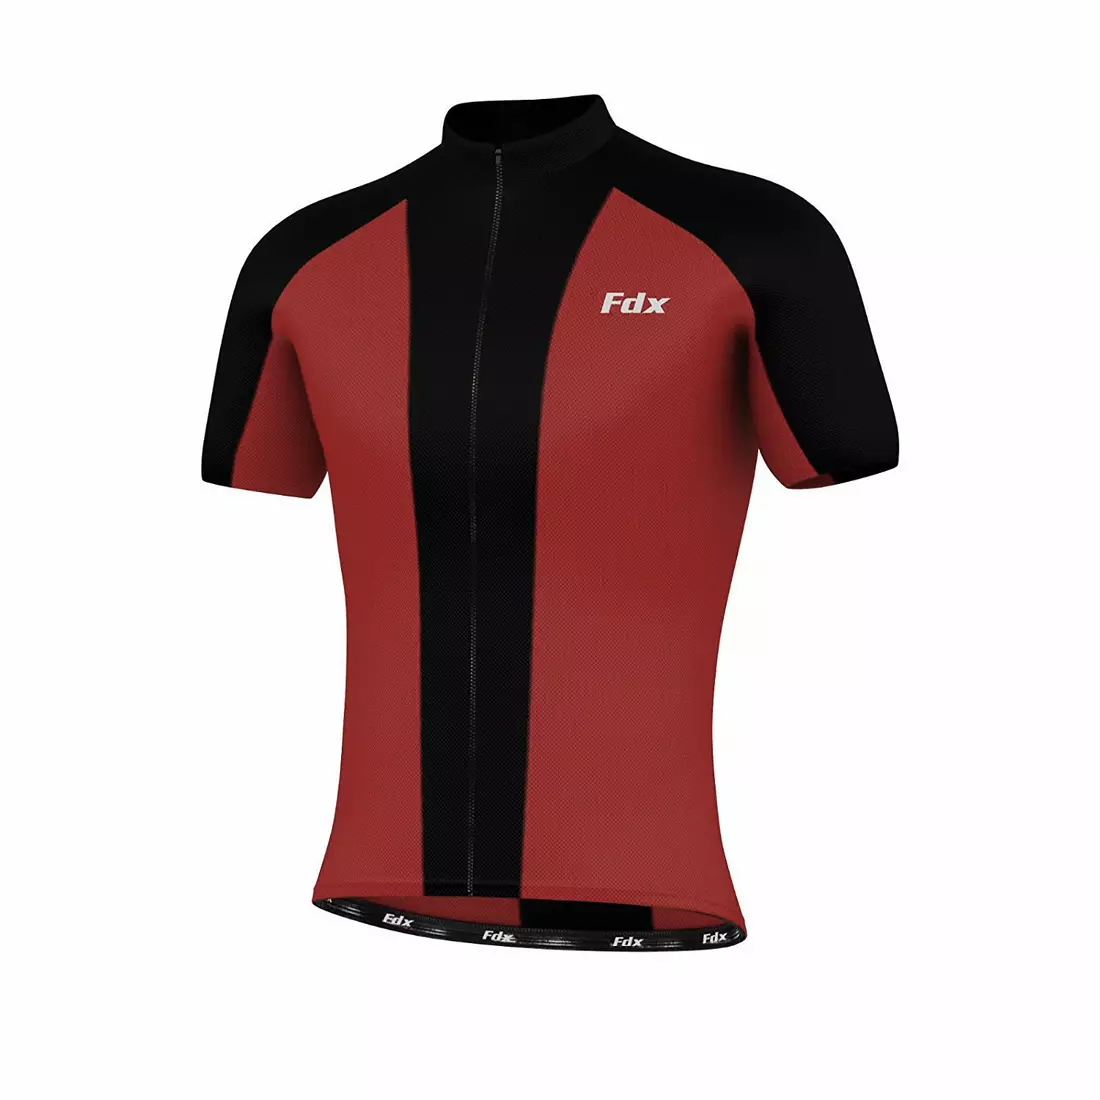 Tricou de ciclism FDX 1080, negru și roșu